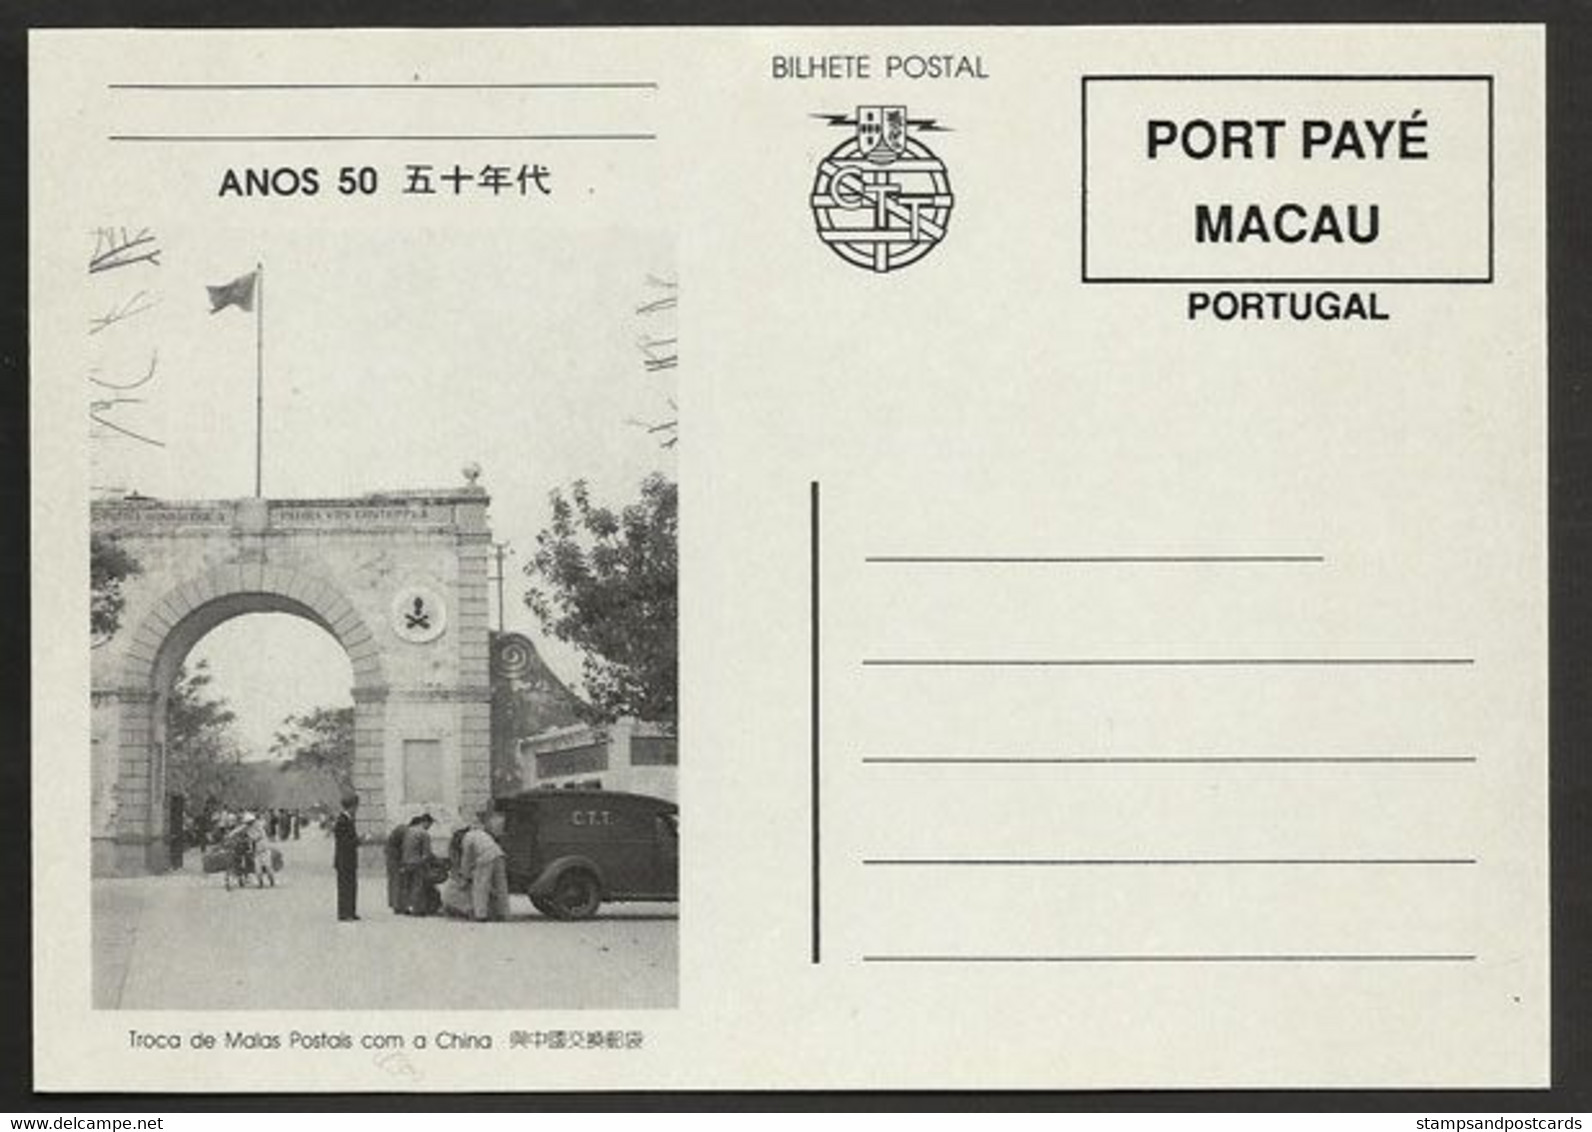 Macau Portugal Entier Postal échange Des Sacs Postaux Avec Chine C. 1990 Macao Stationery Exchanging Mail Bags W/ China - Interi Postali